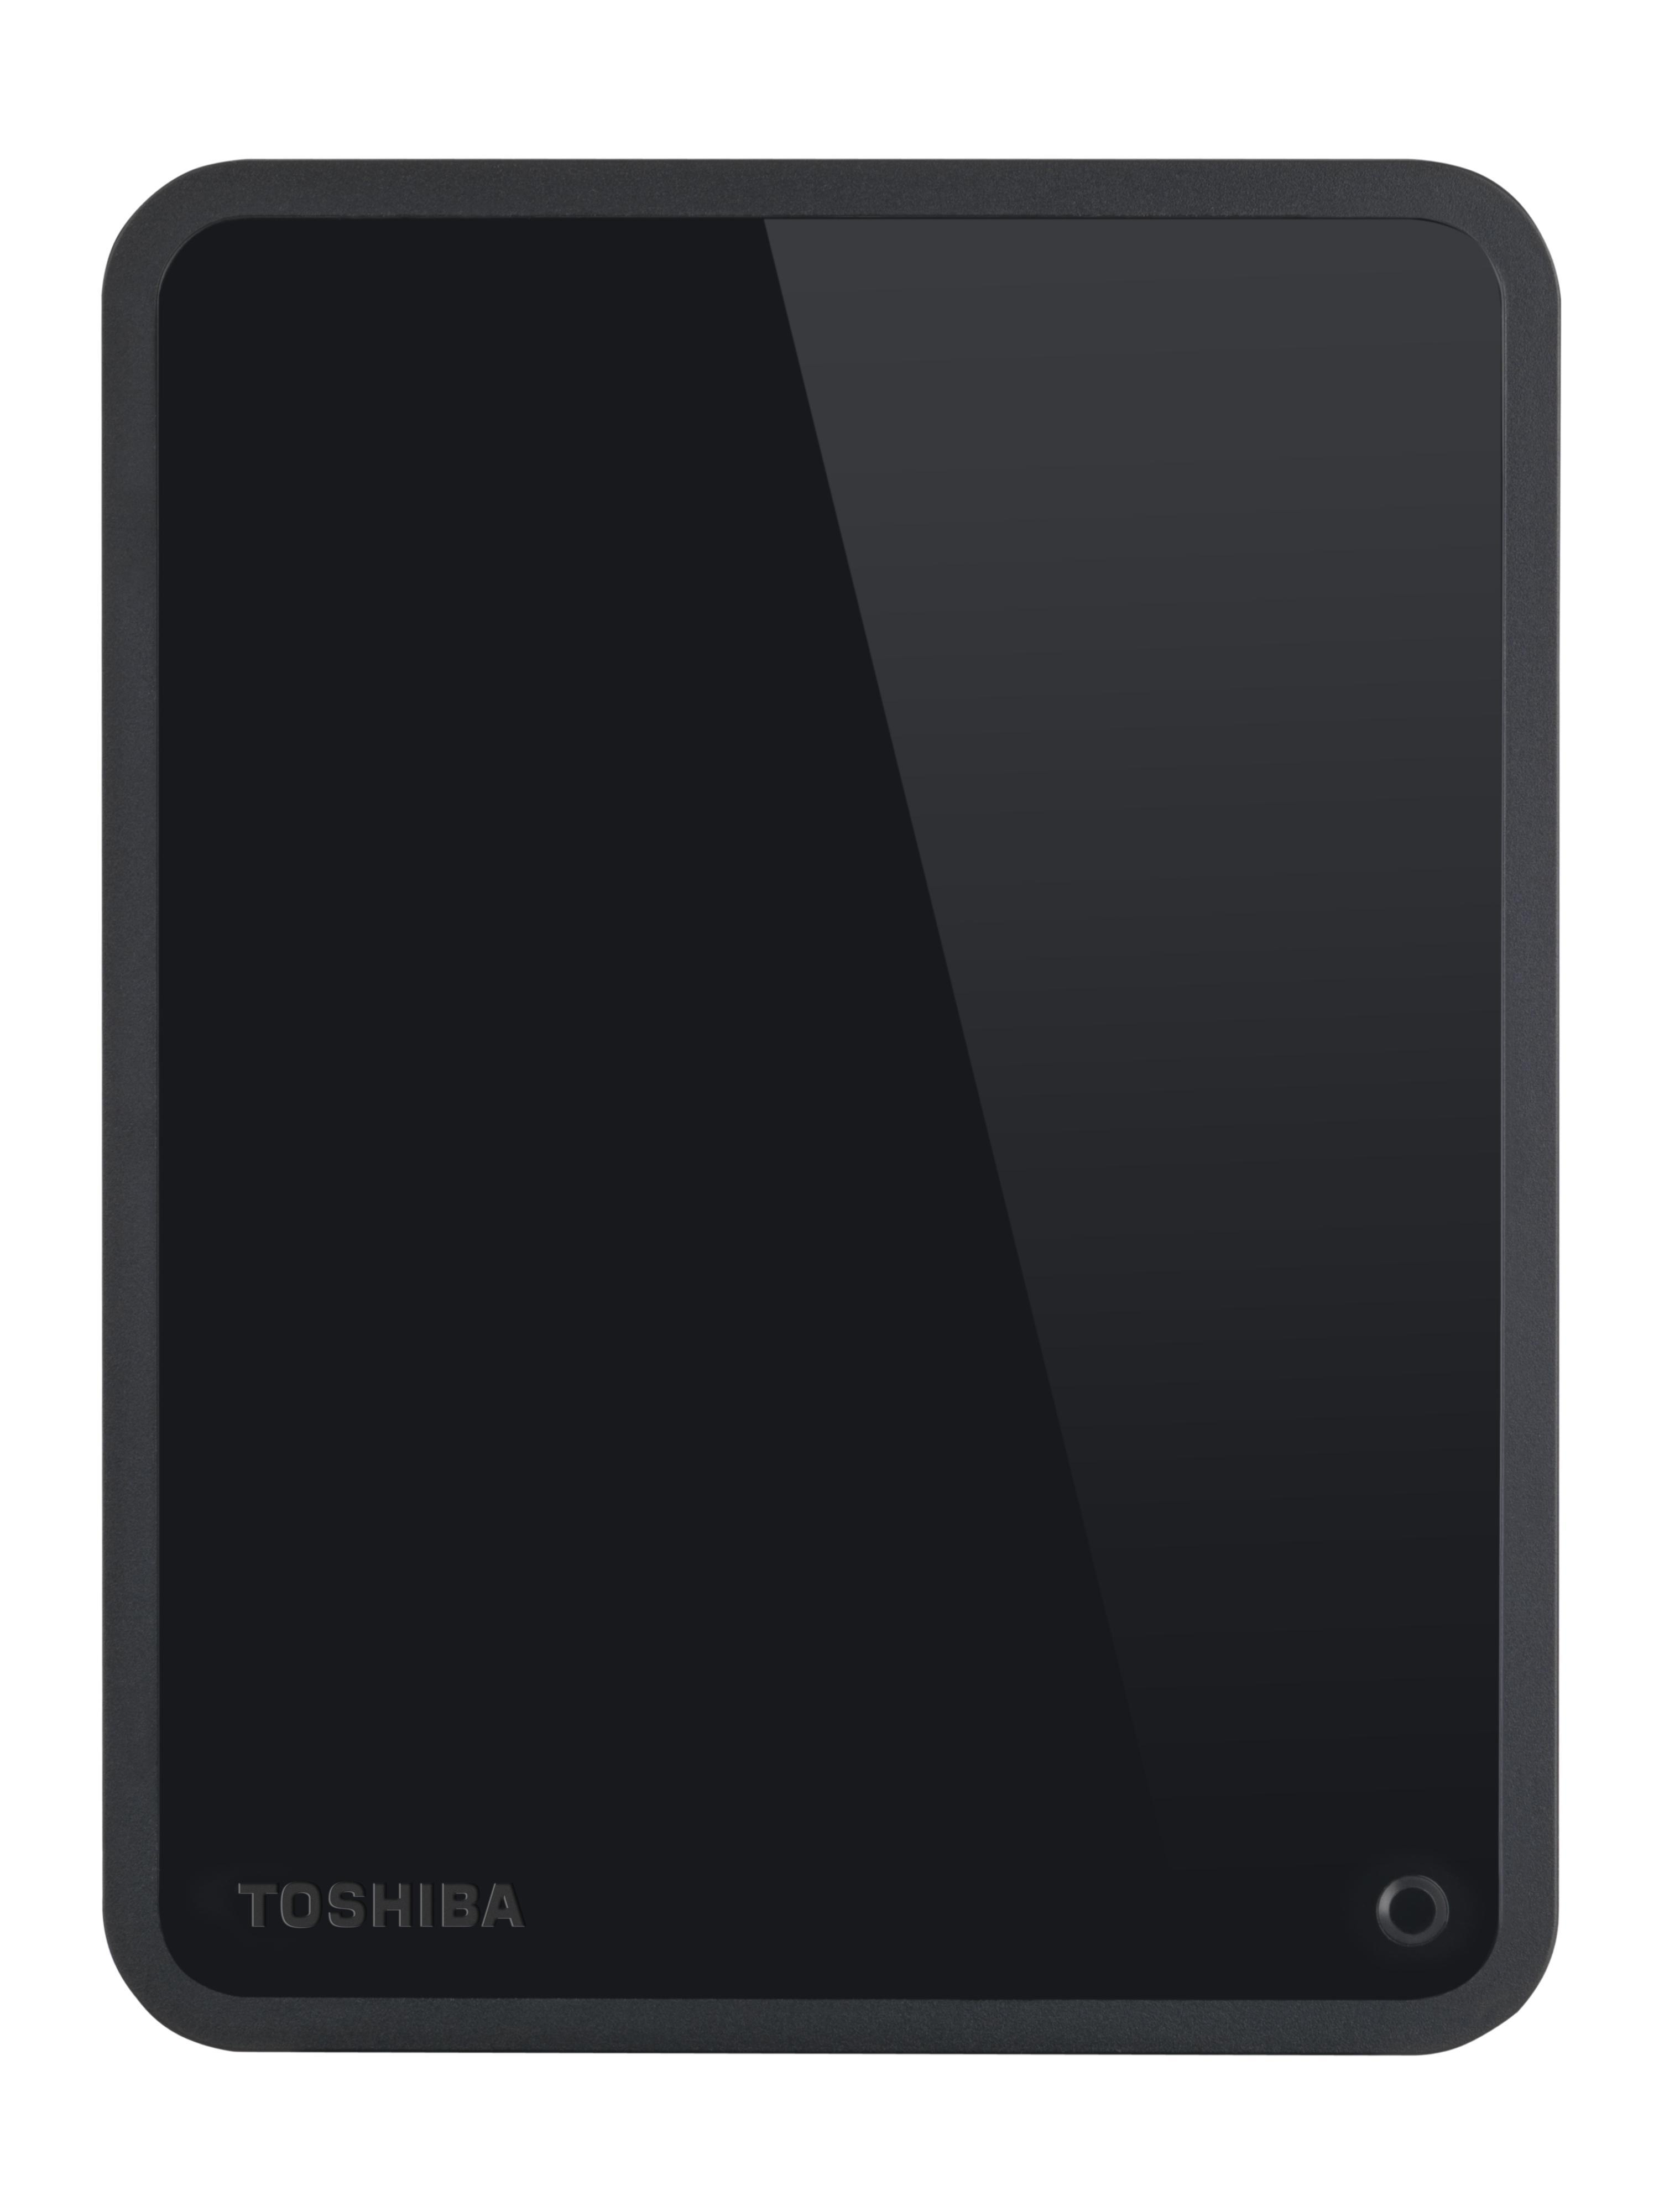 TOSHIBA Canvio for extern, Desktop TB 6 Zoll, Festplatte, 3,5 HDD, Schwarz